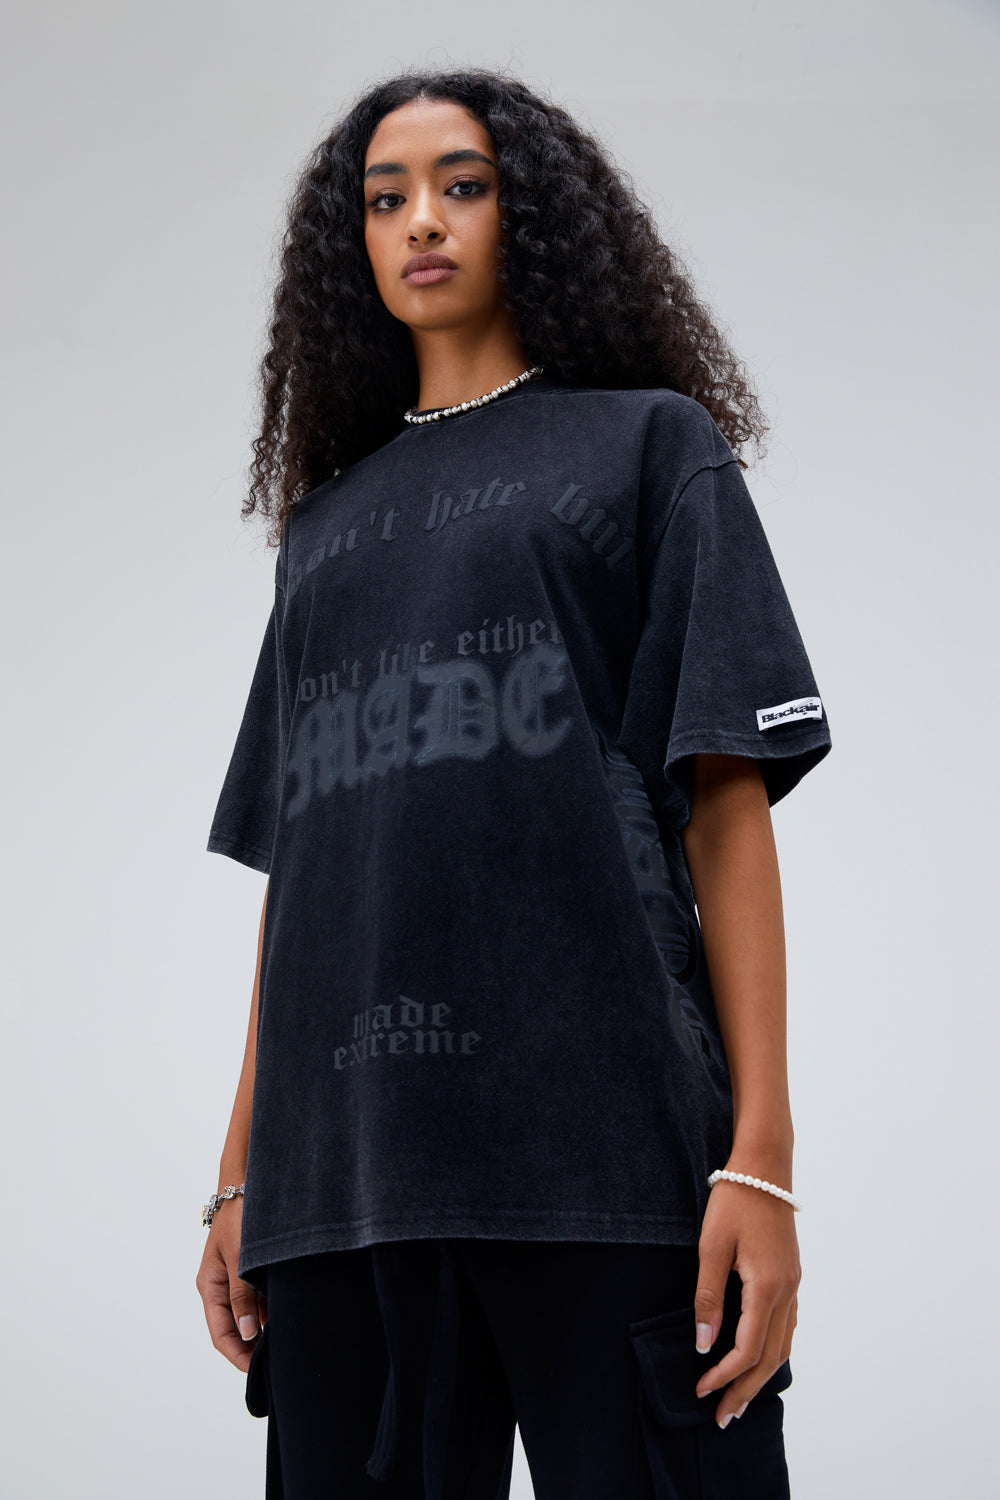 Made Extreme Black Air Letter Graffiti Graphic Streetwear T Shirt